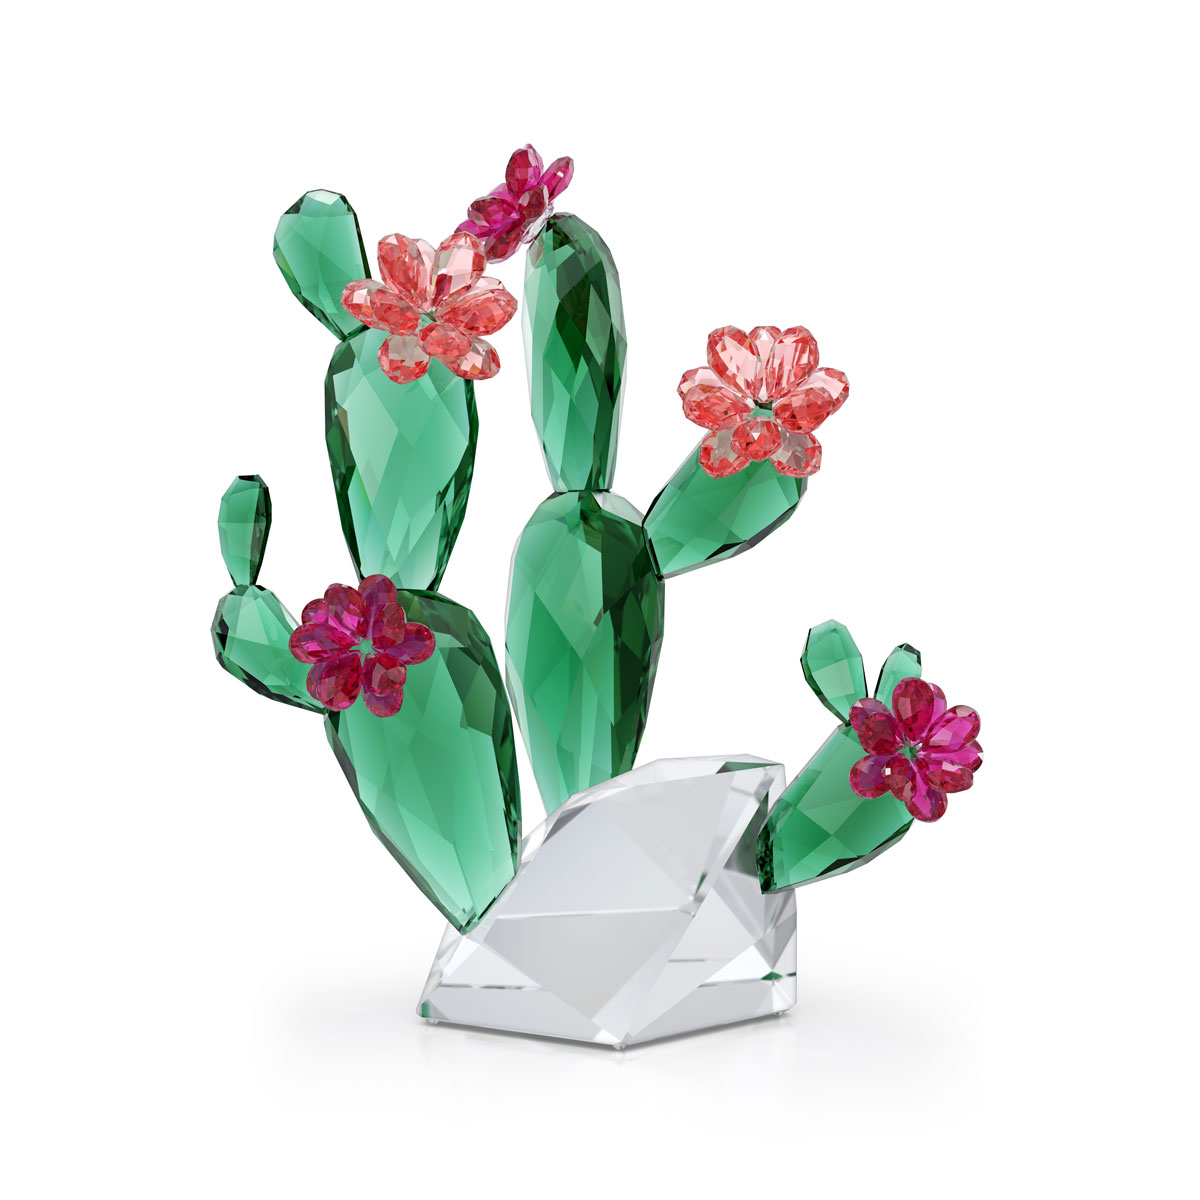 Swarovski Crystal Flowers Desert Pink Cactus